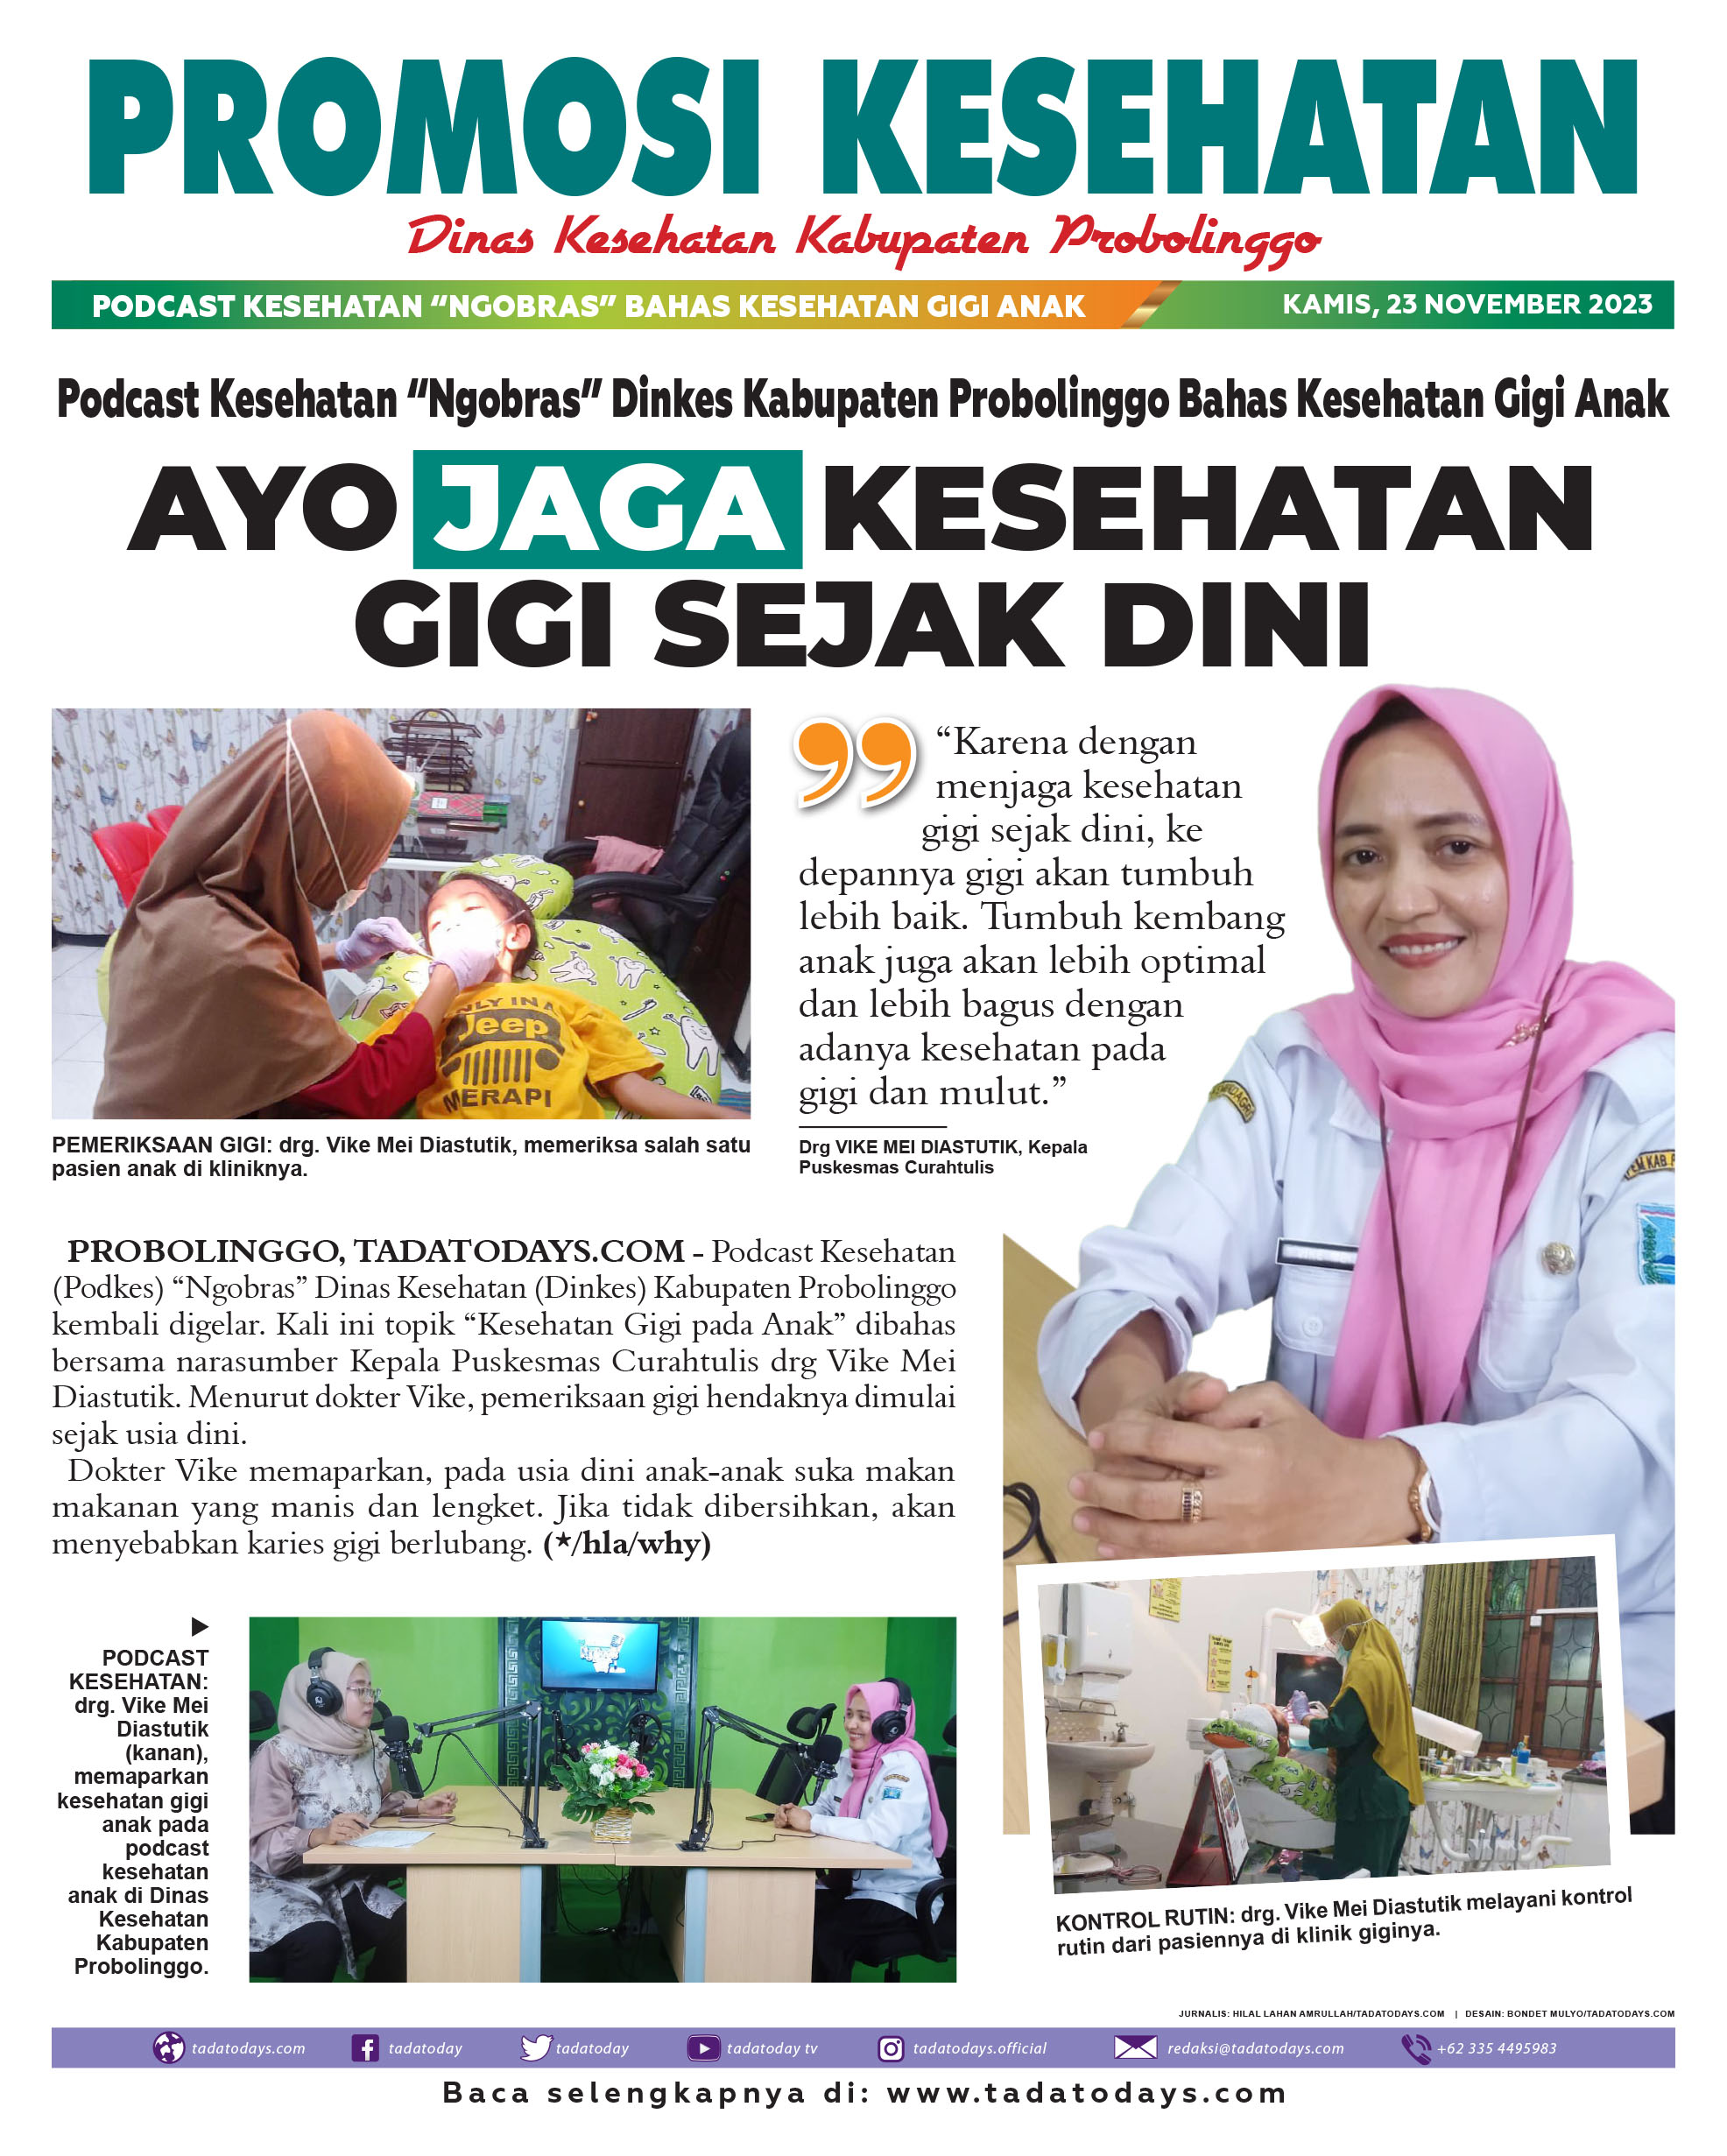 Podcast Kesehatan “Ngobras” Dinkes Kabupaten Probolinggo Membahas Kesehatan Gigi Anak